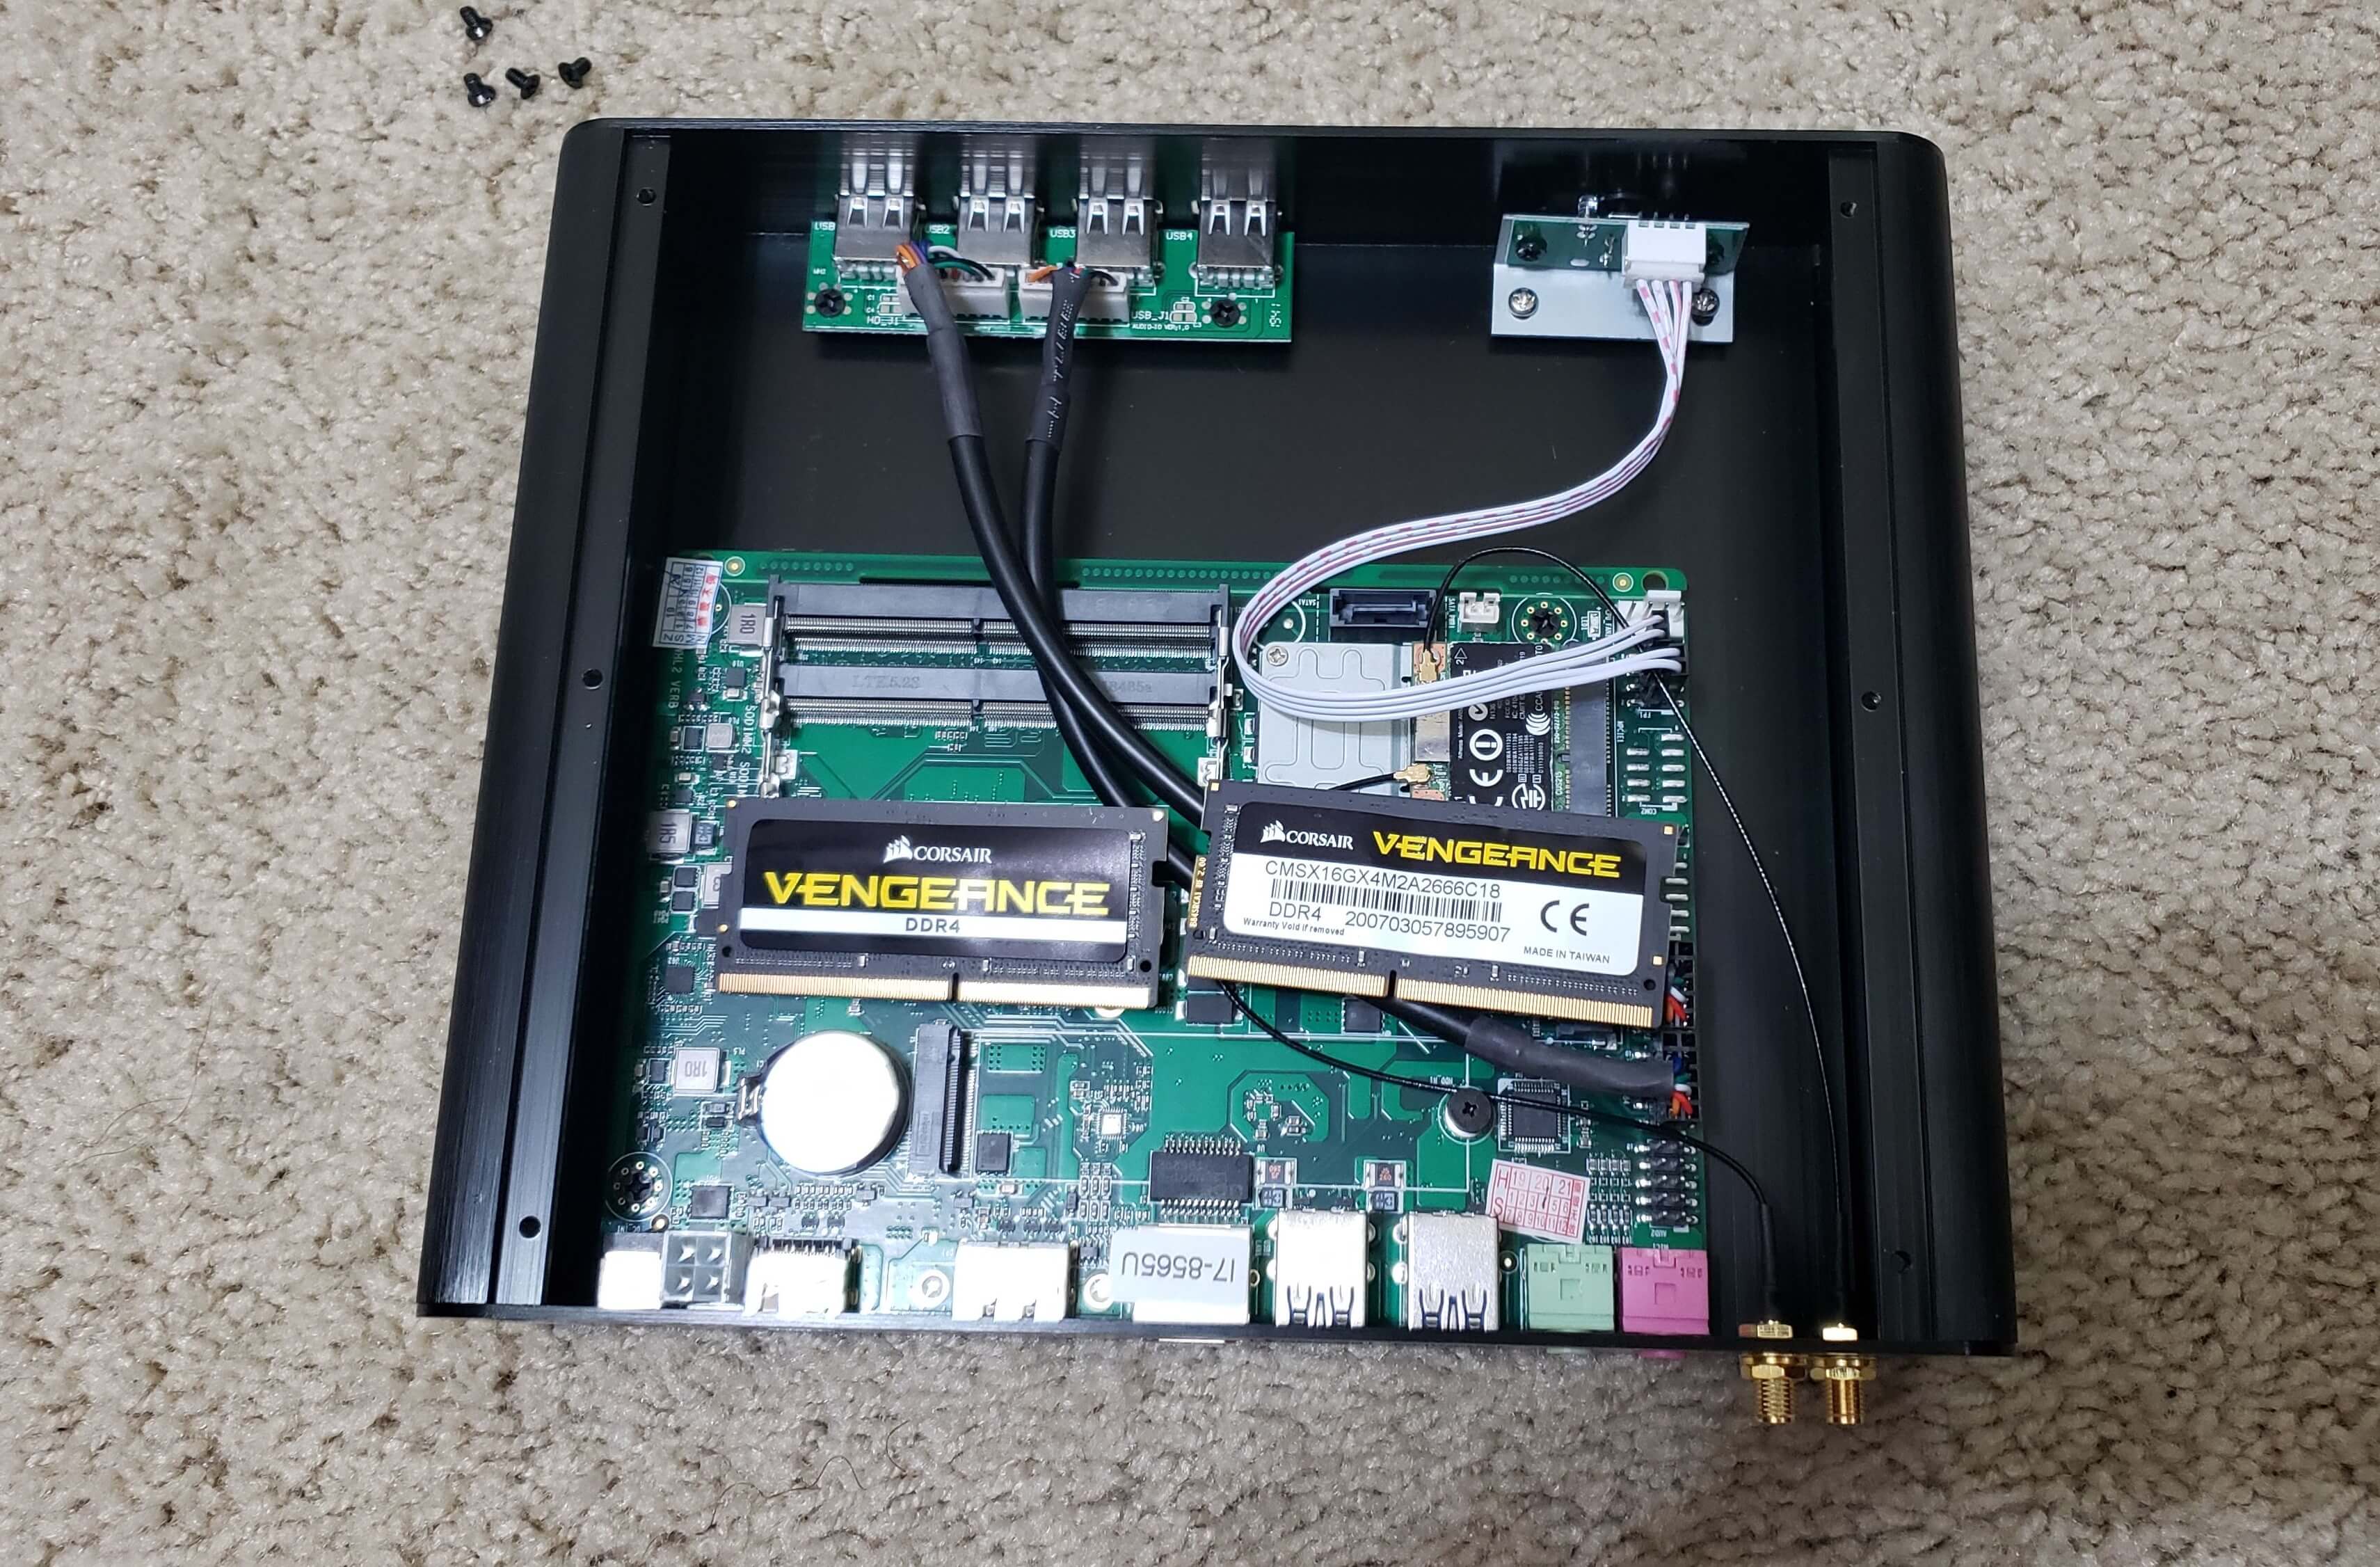 Mini PC unboxed